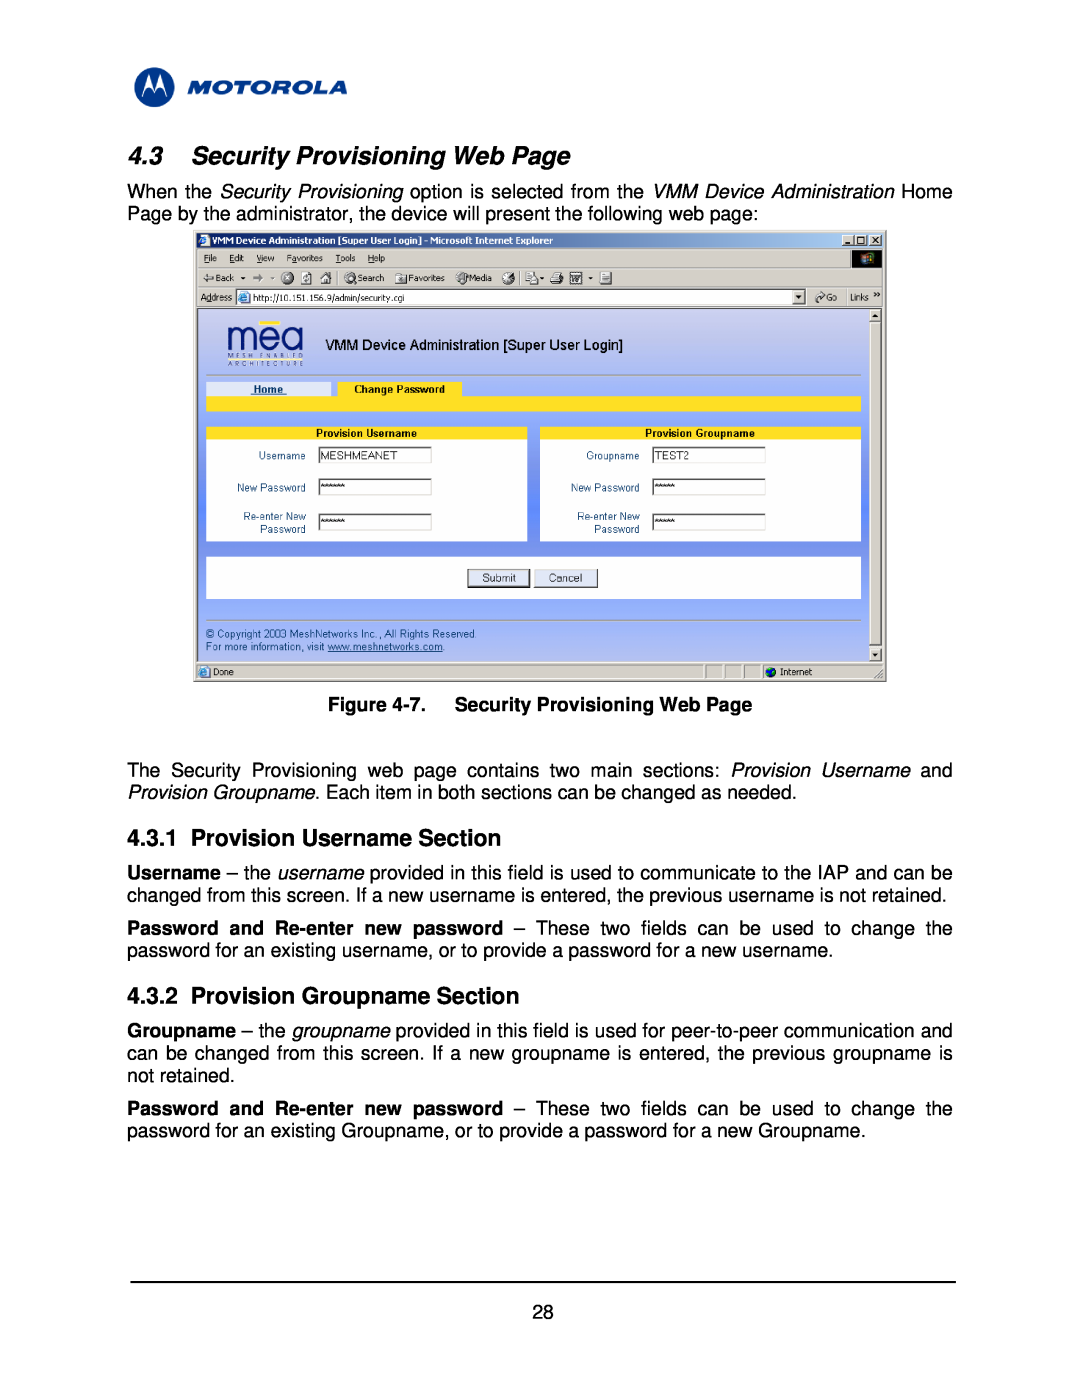 Motorola 3.1 manual Security Provisioning Web Page, Provision Username Section, Provision Groupname Section 